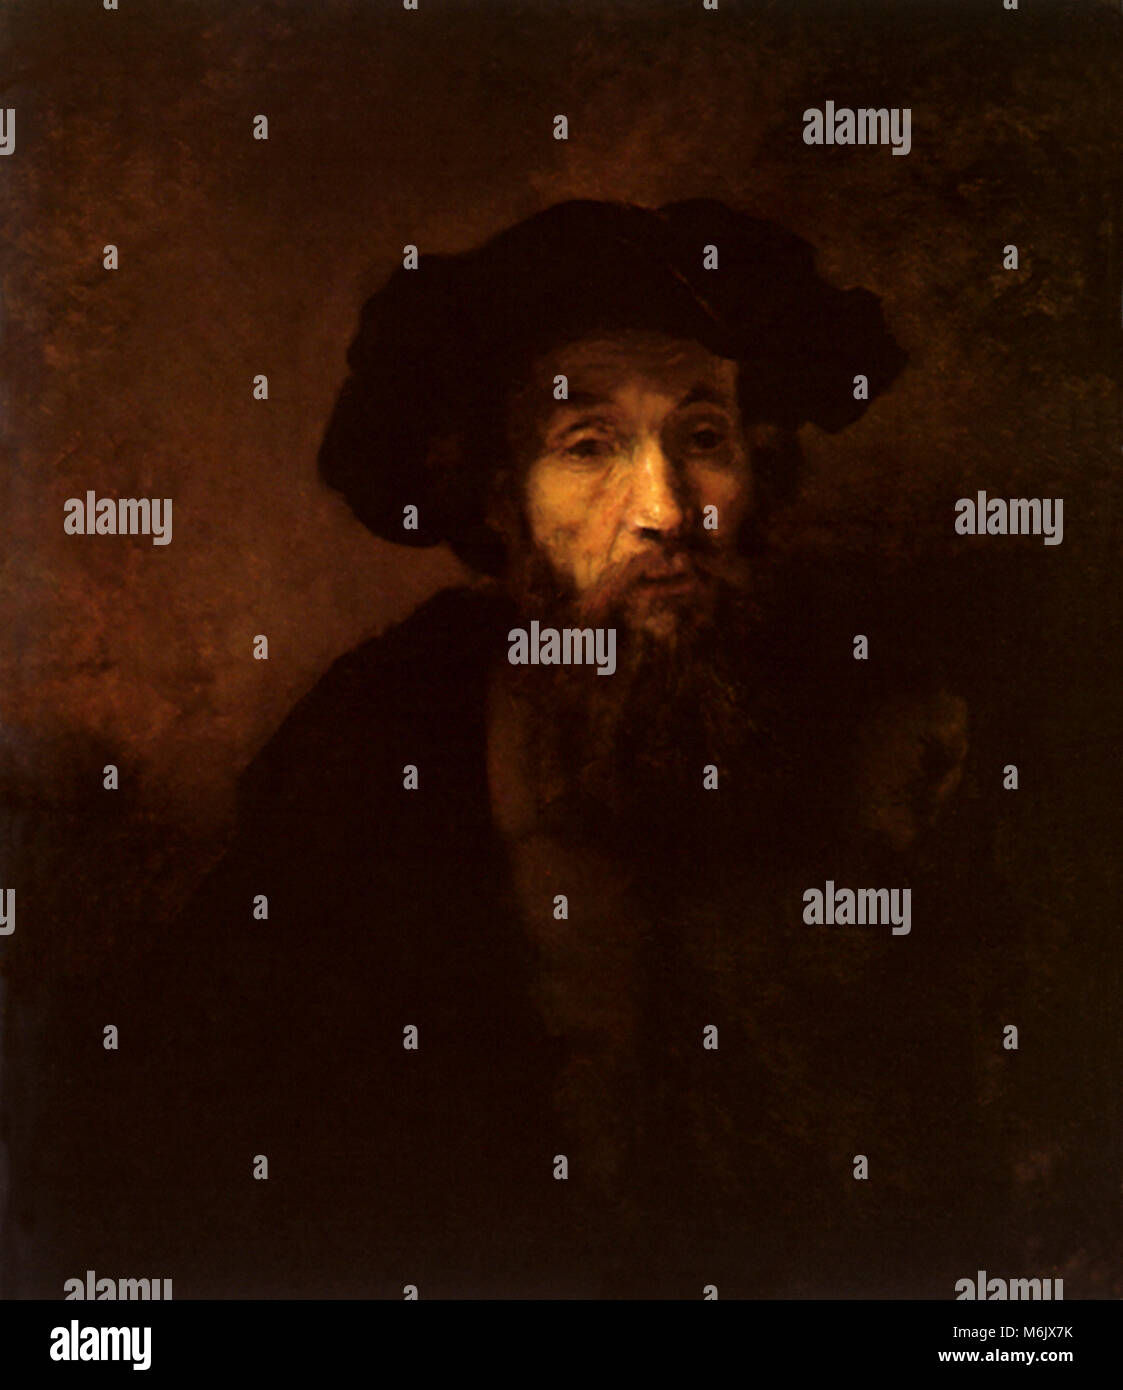 A Bearded Old Man in a Cap, Rembrandt, Harmensz van Rijn, 1657. Stock Photo